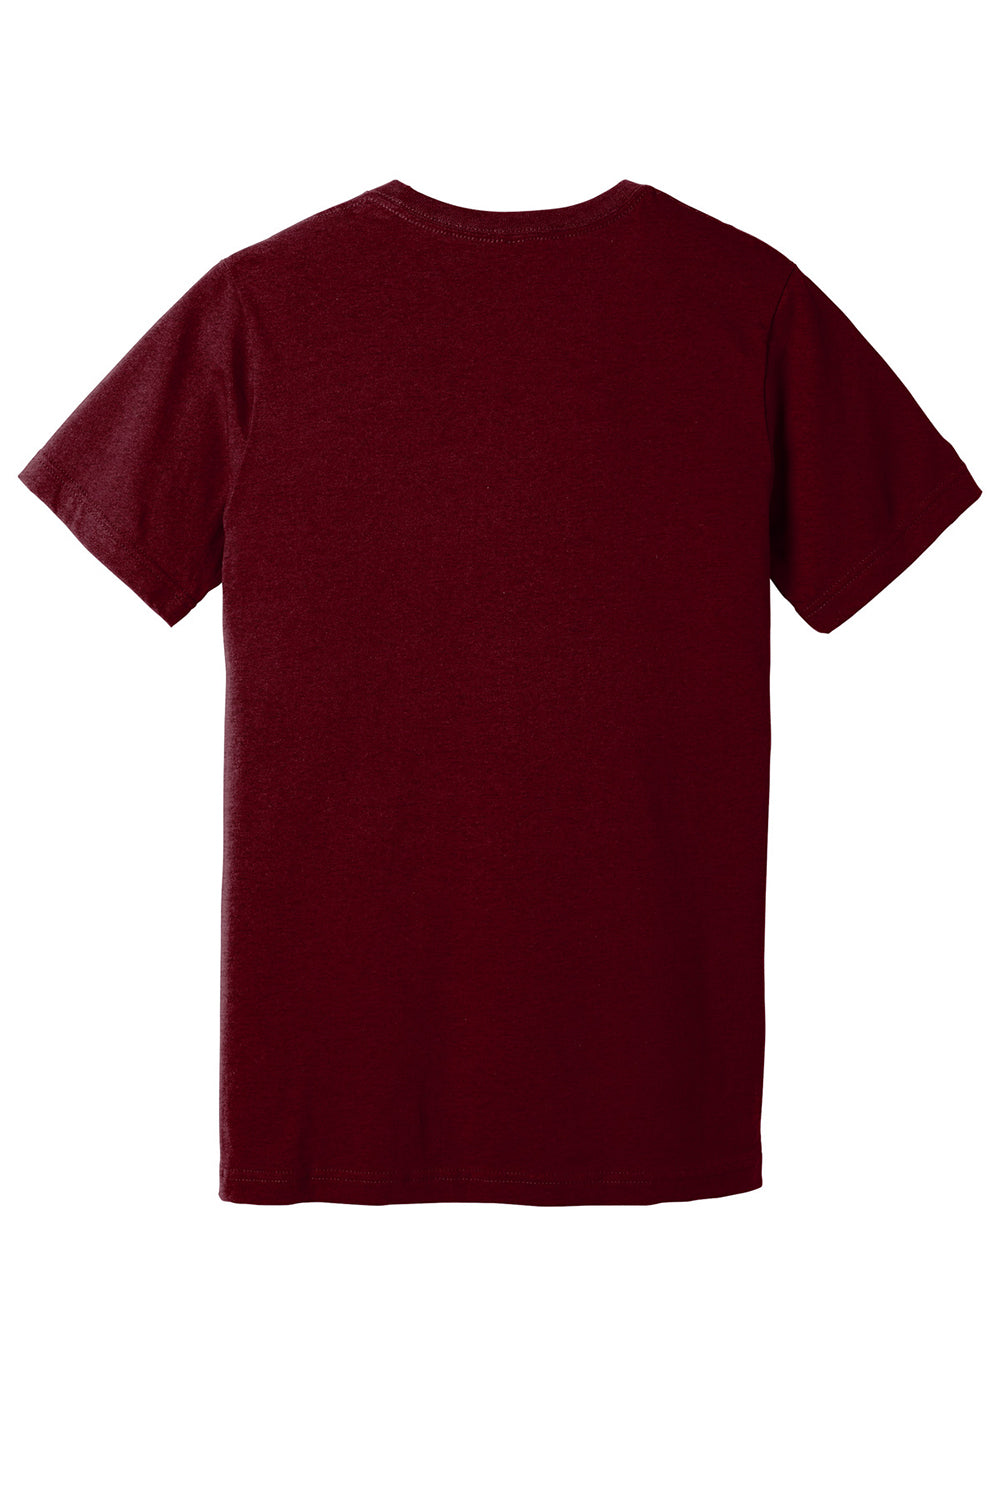 Bella + Canvas BC3005CVC Mens CVC Short Sleeve V-Neck T-Shirt Heather Cardinal Red Flat Back